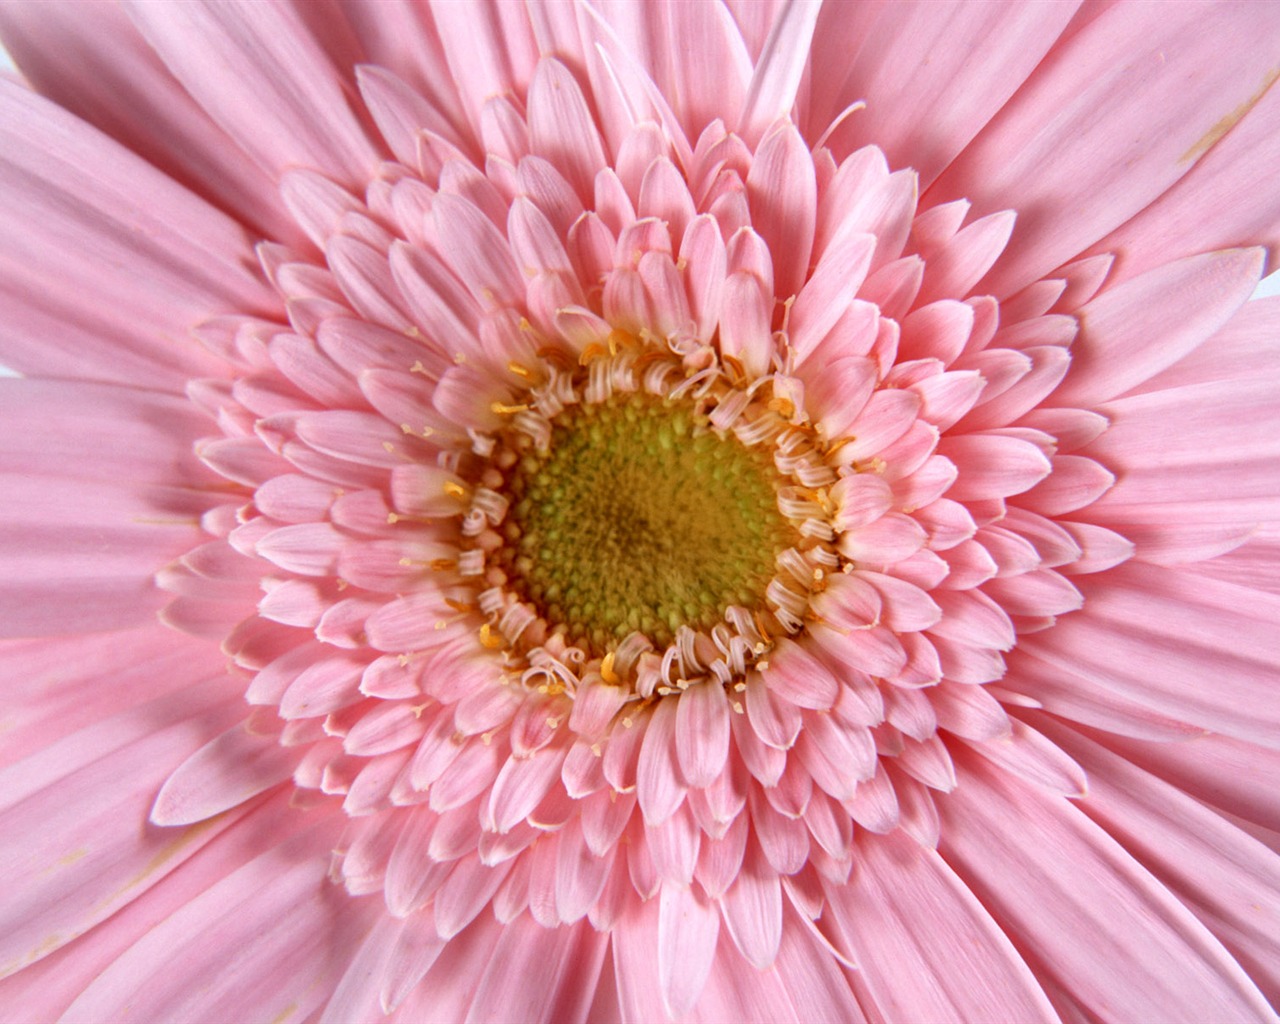 Flowers close-up (11) #2 - 1280x1024